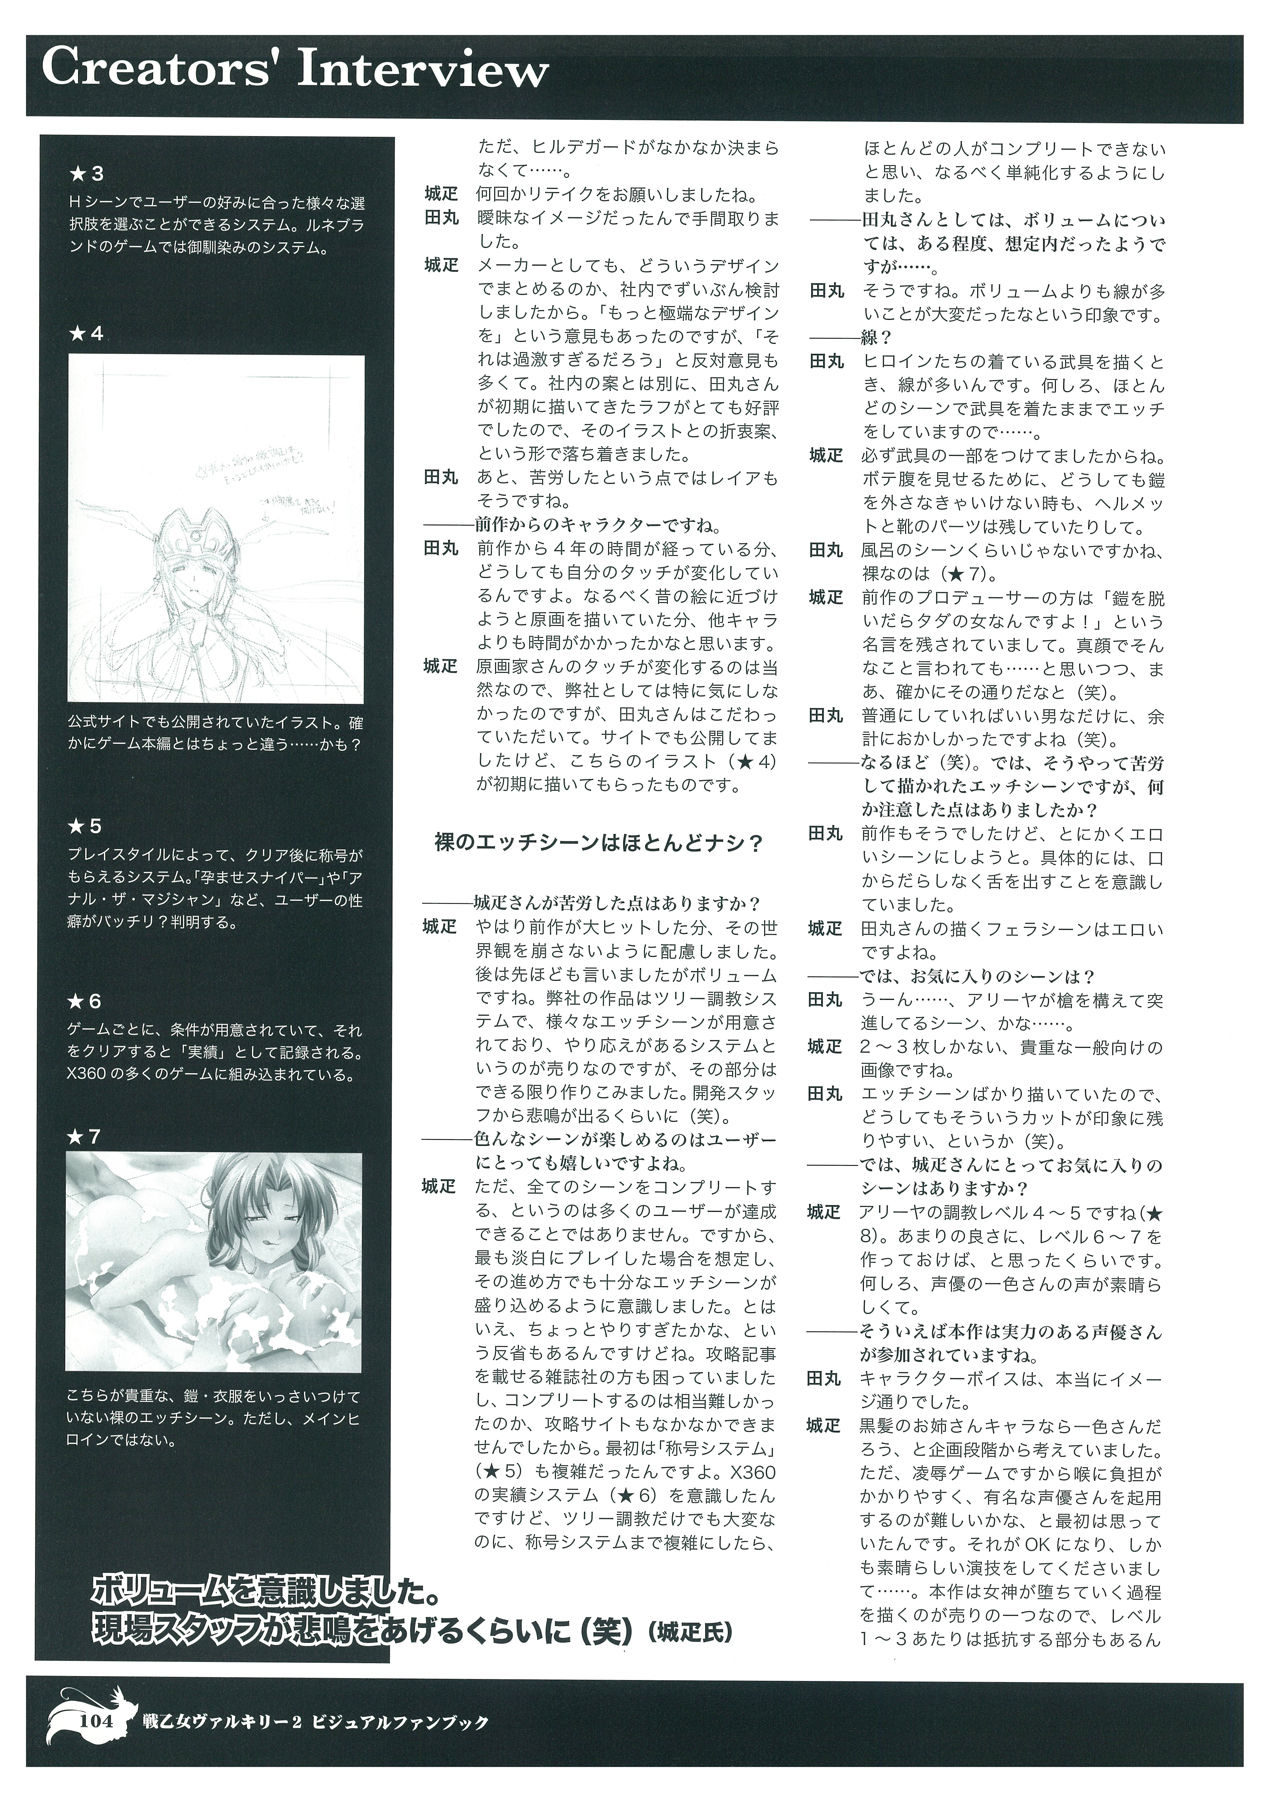 Ikusa Otome Valkyrie 2 Visual Fanbook 戦乙女ヴァルキリー2 ビジュアルファンブック